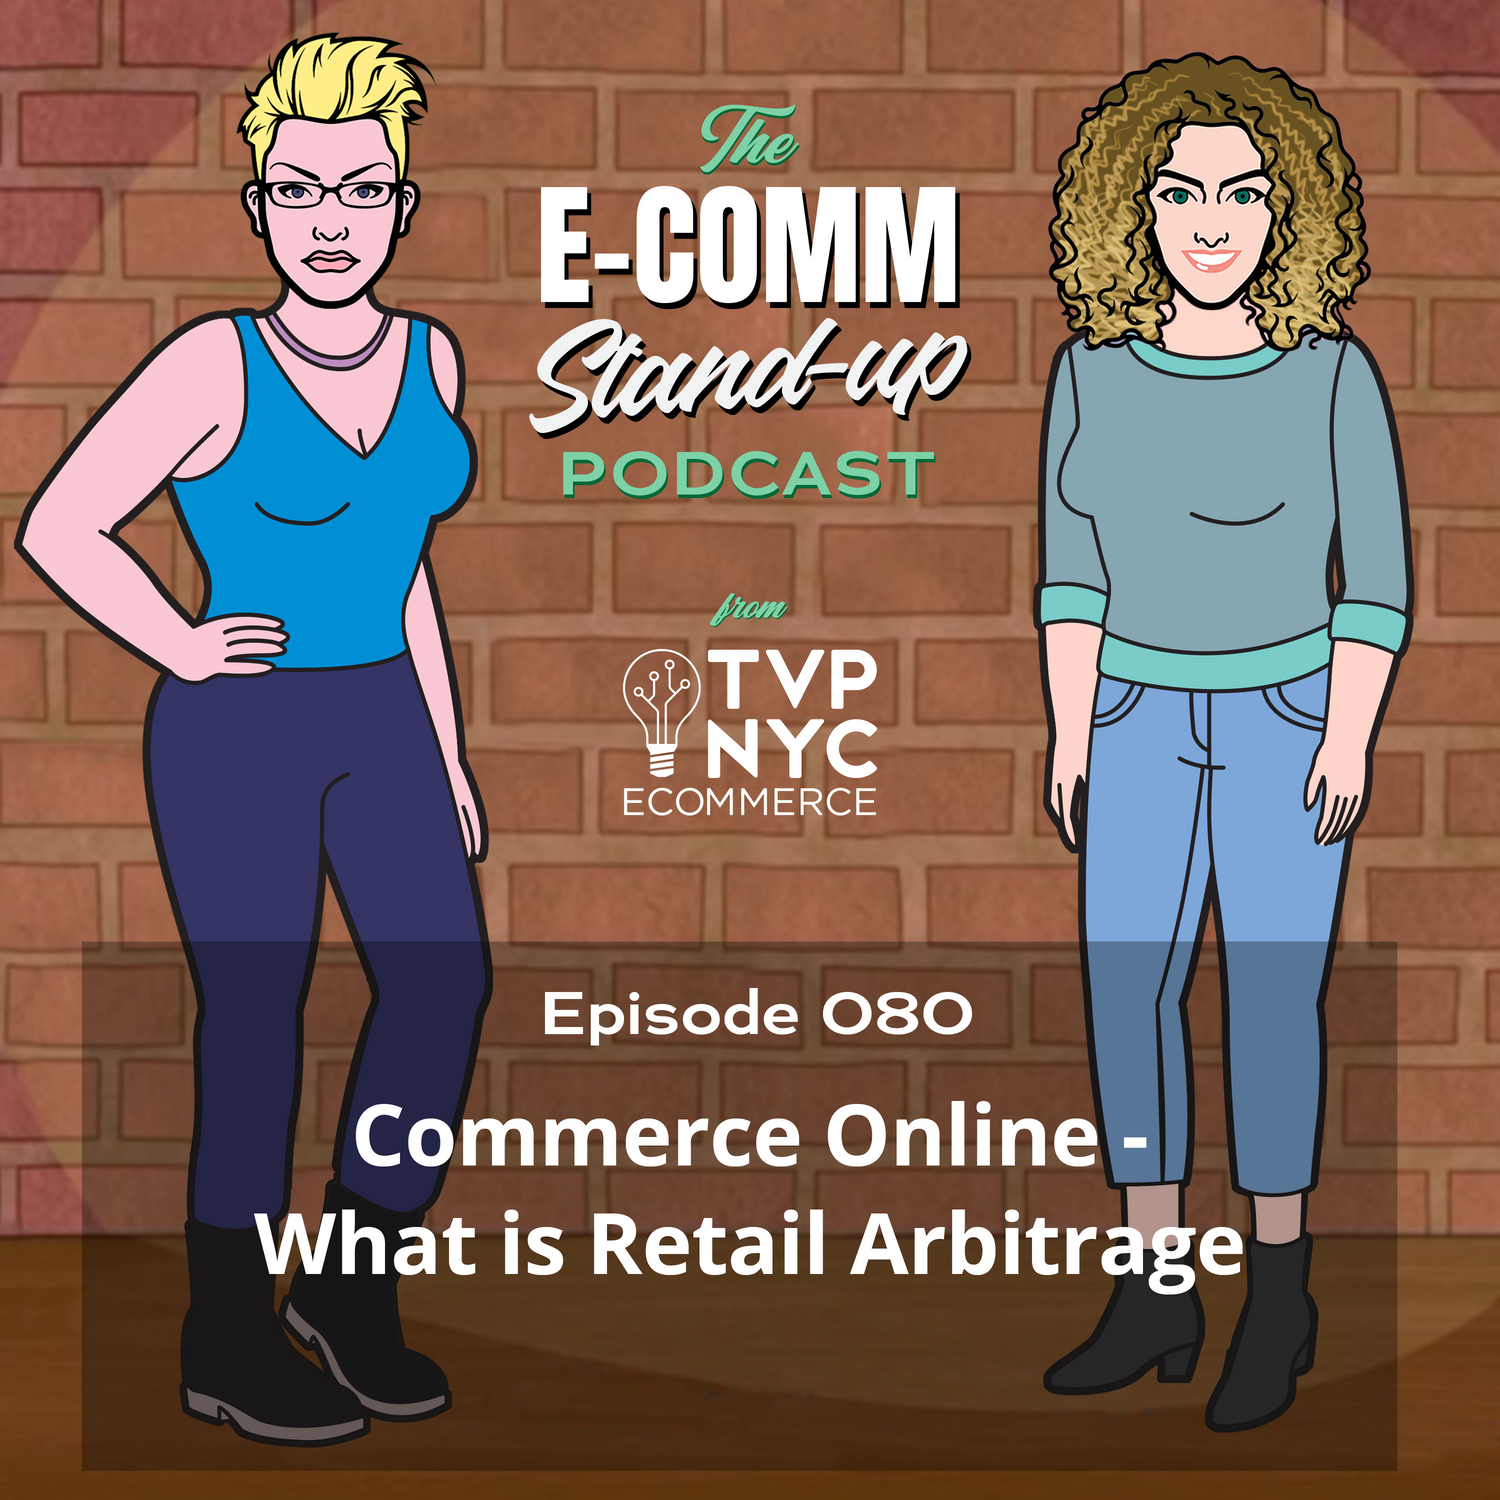 Commerce Online - What is Retail Arbitrage